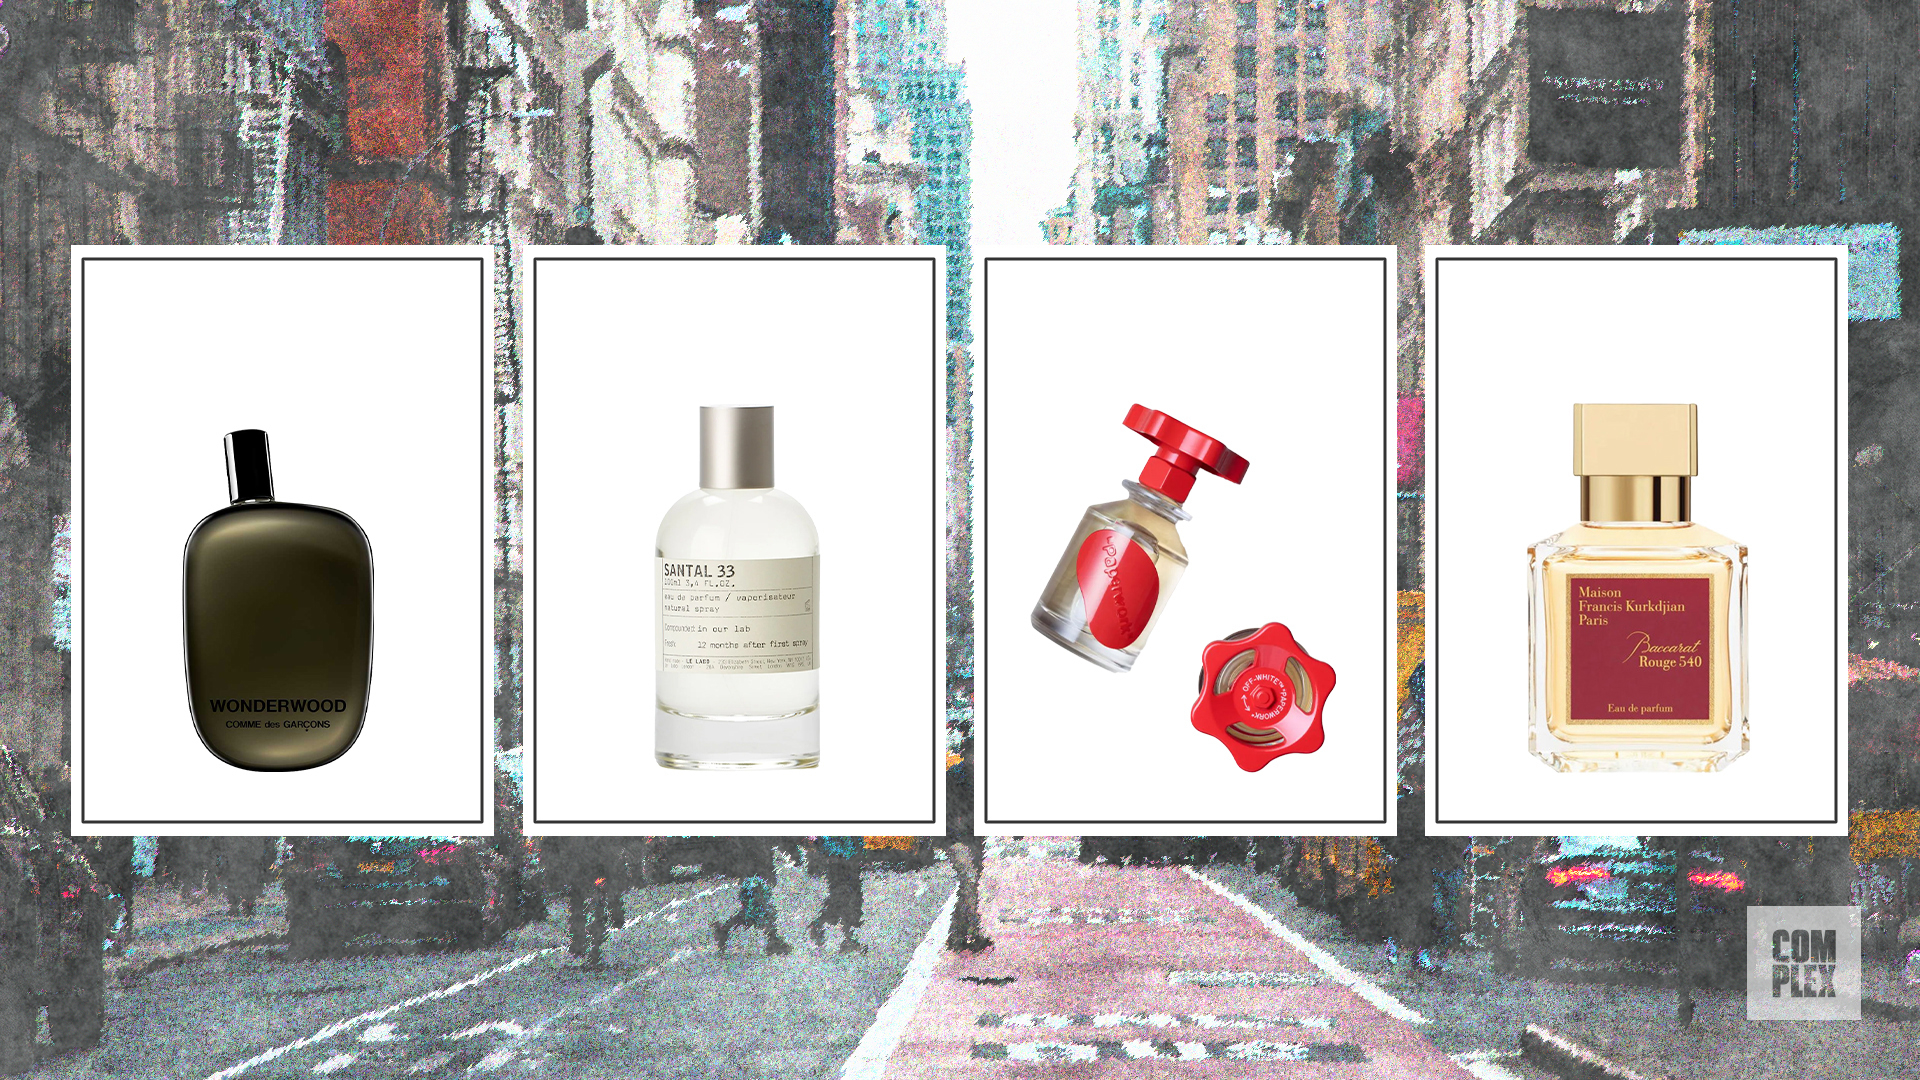 Fragrance bottles in a New York City setting.